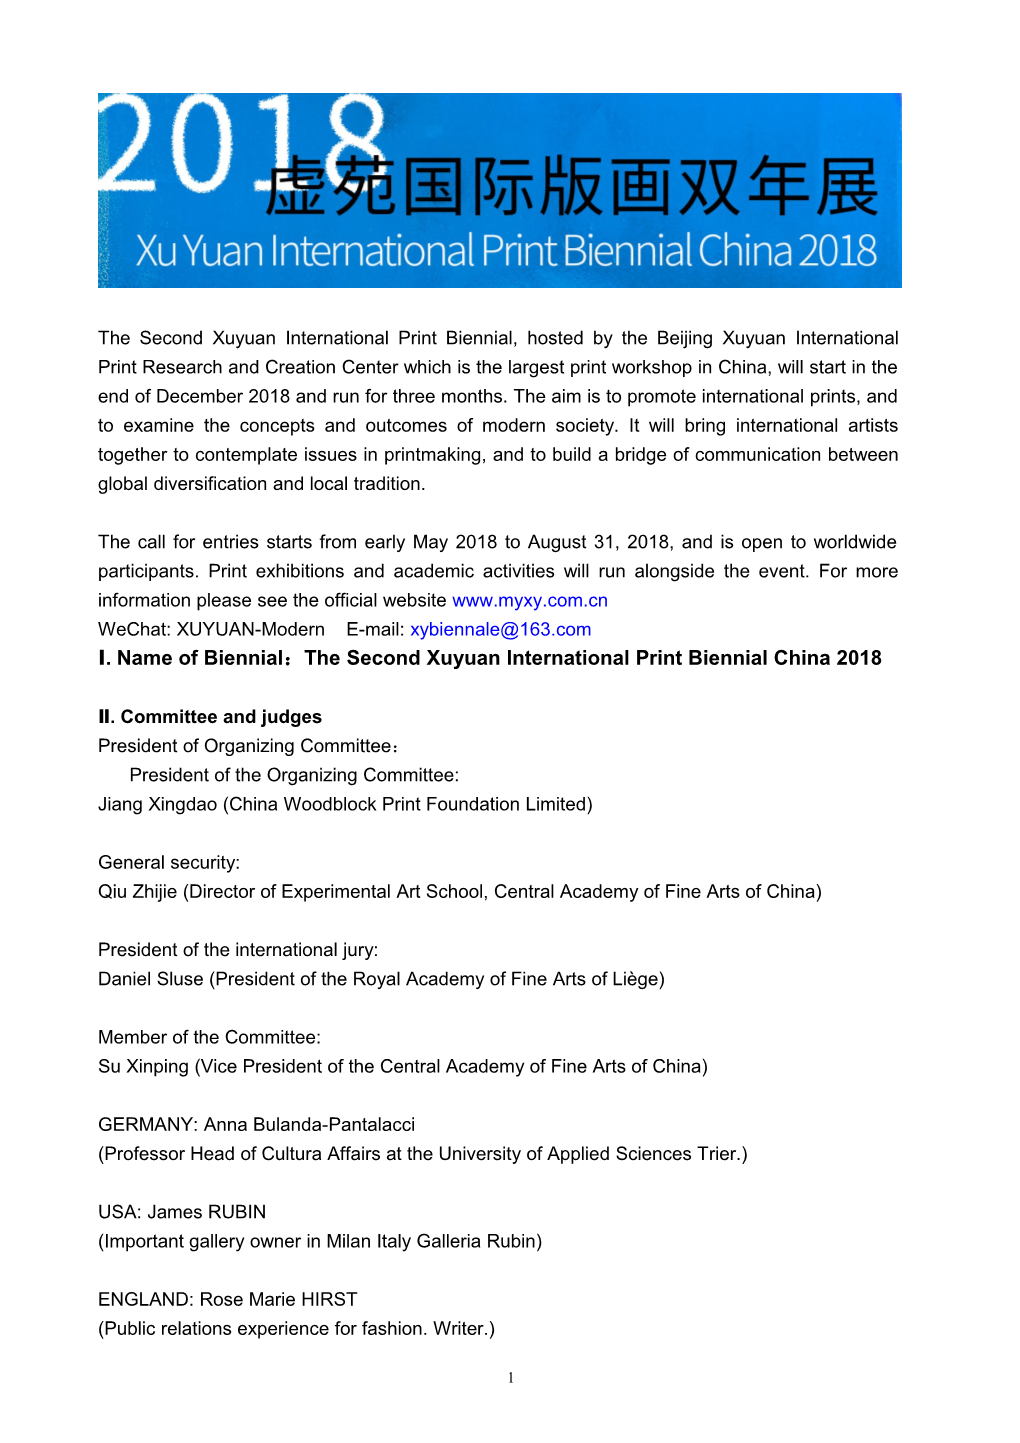 Name of Biennial the Second Xuyuan International Print Biennial China 2018